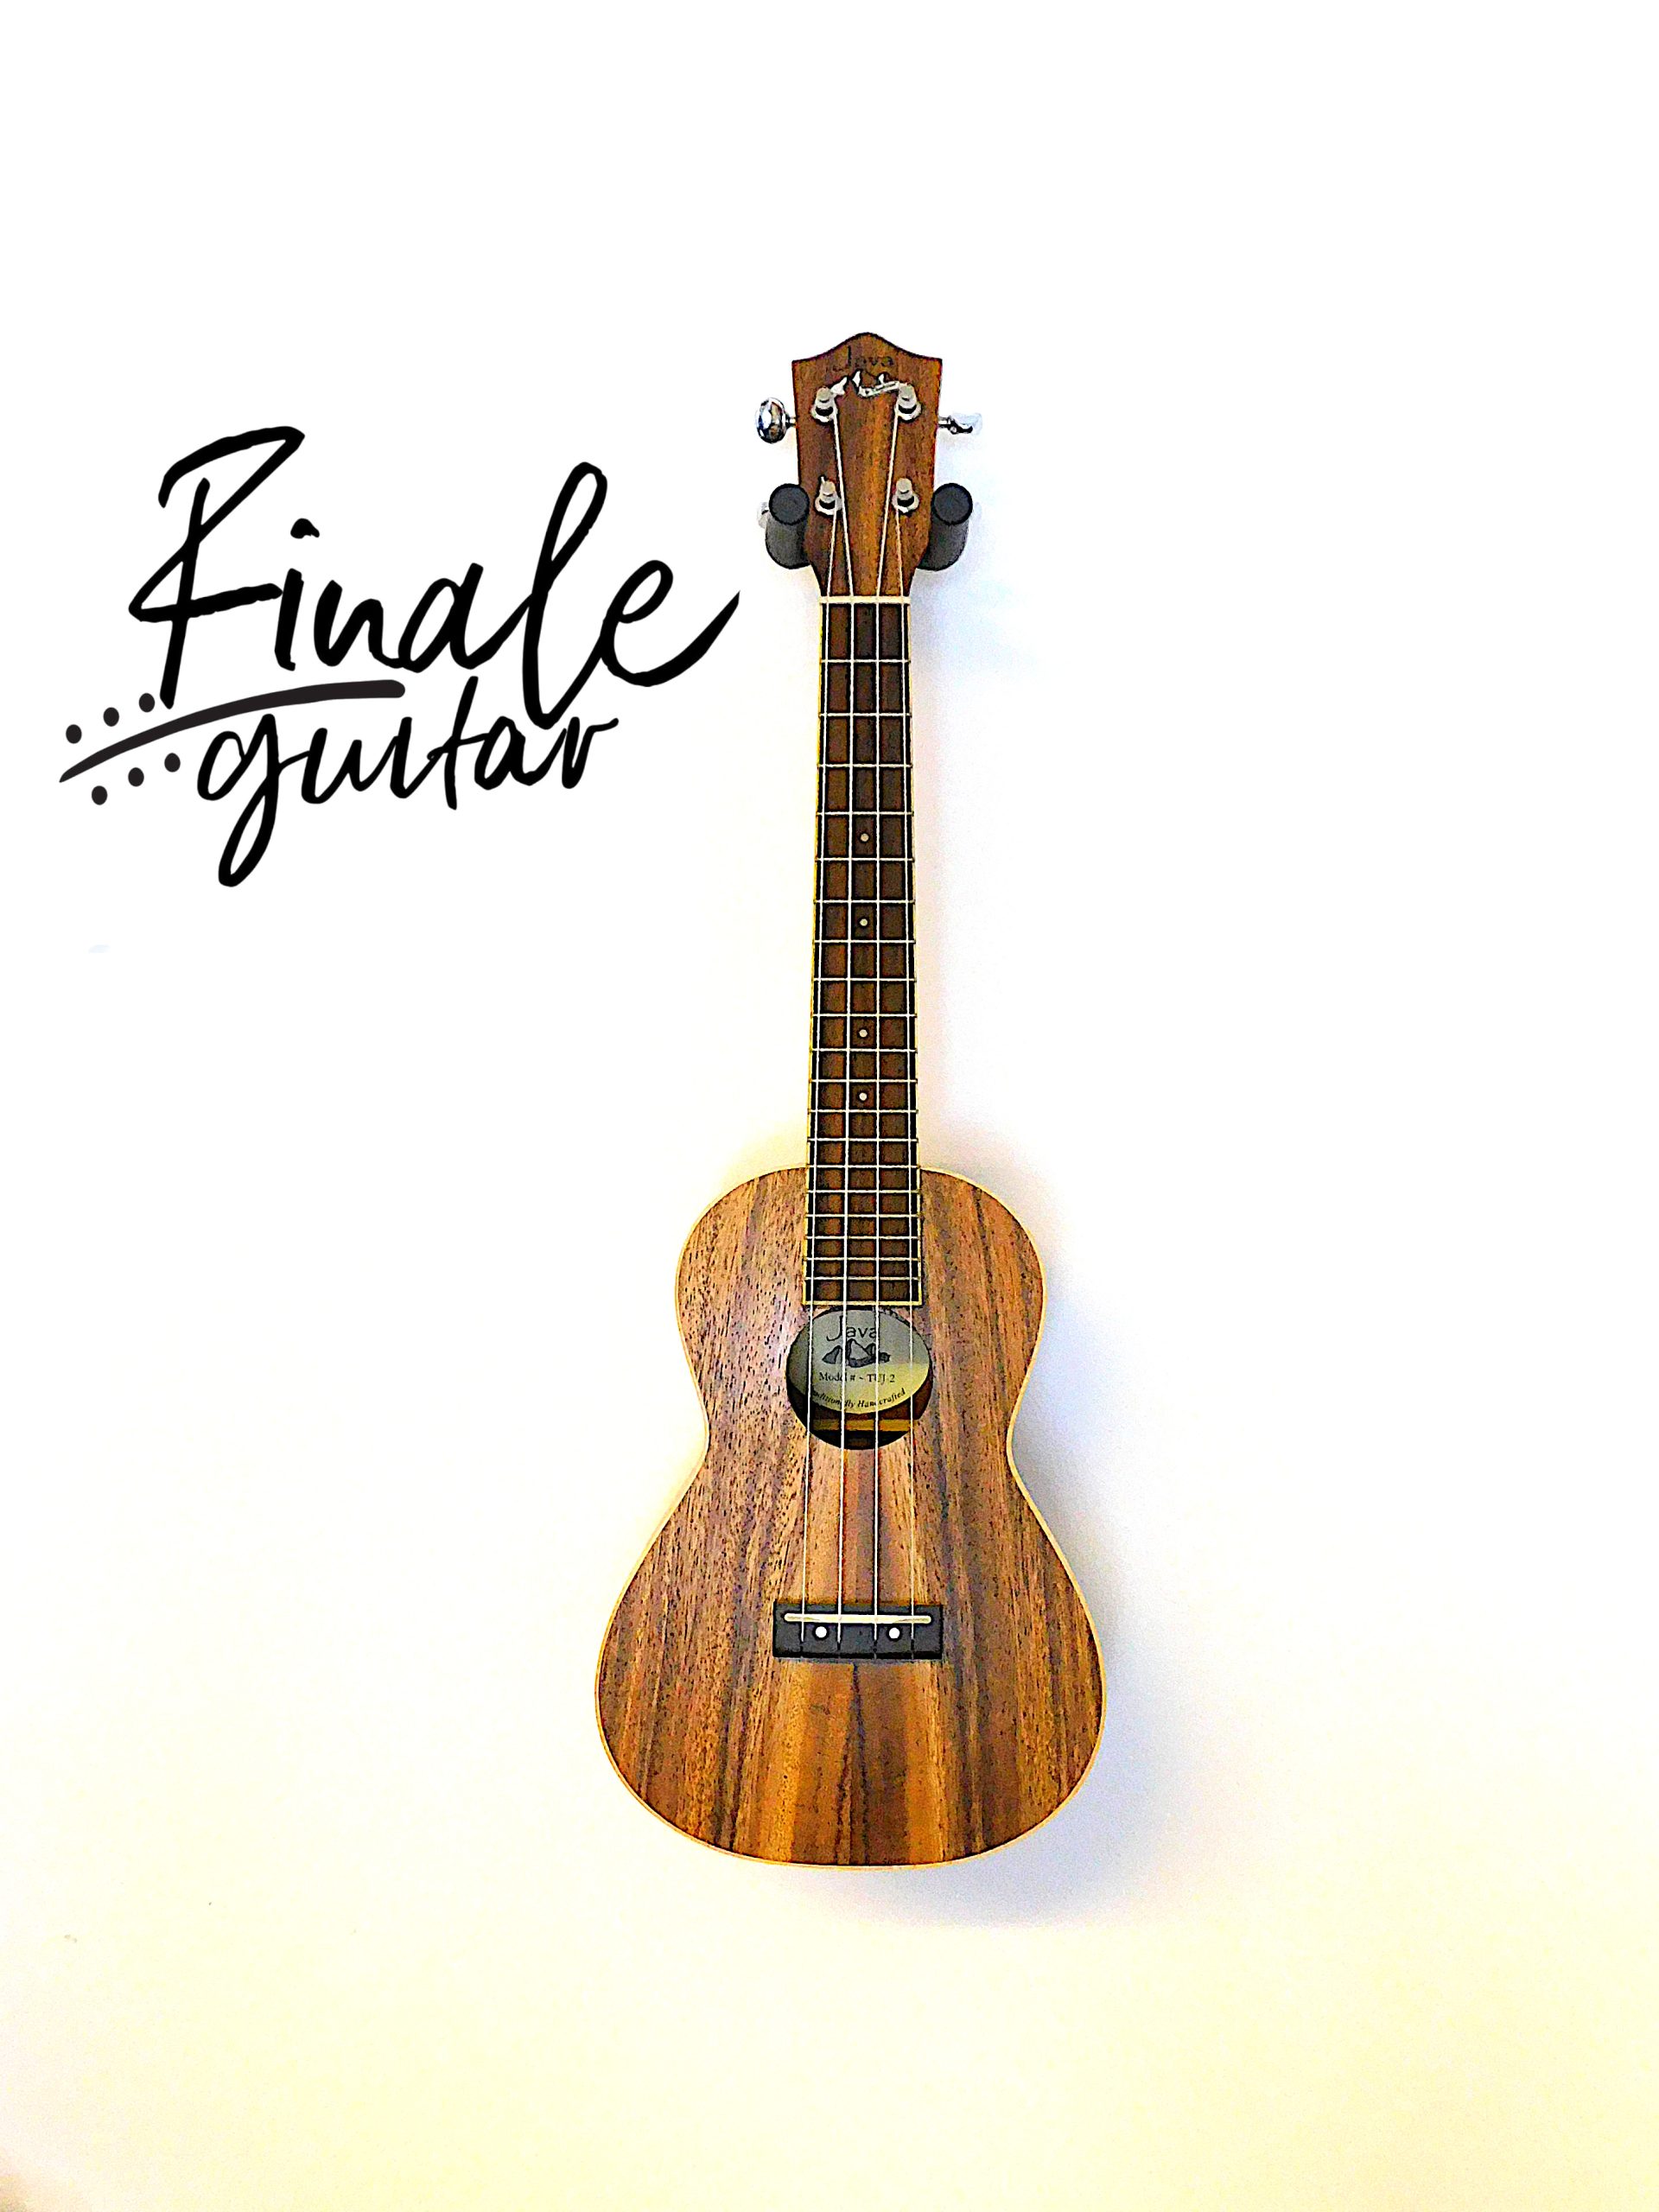 Tanglewood Java TUJ2 concert ukulele for sale in our Sheffield guitar shop, Finale Guitar